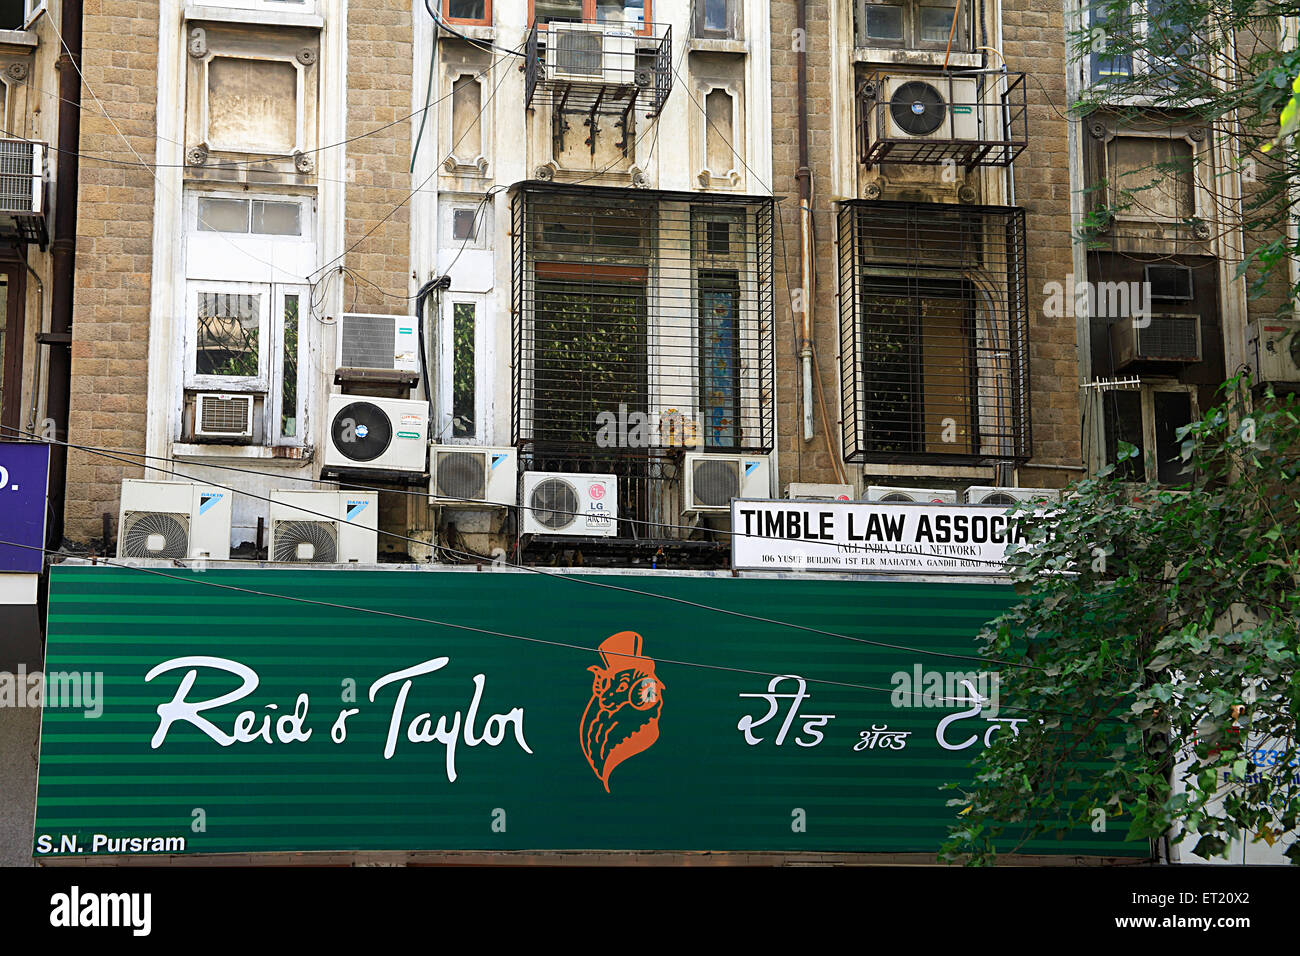 Reid & Taylor Schild, altes Haus, S N Pursram, Timble Law, Churchgate, Bombay, Mumbai, Maharashtra, Indien, Asien, Asiatisch, Indisch Stockfoto